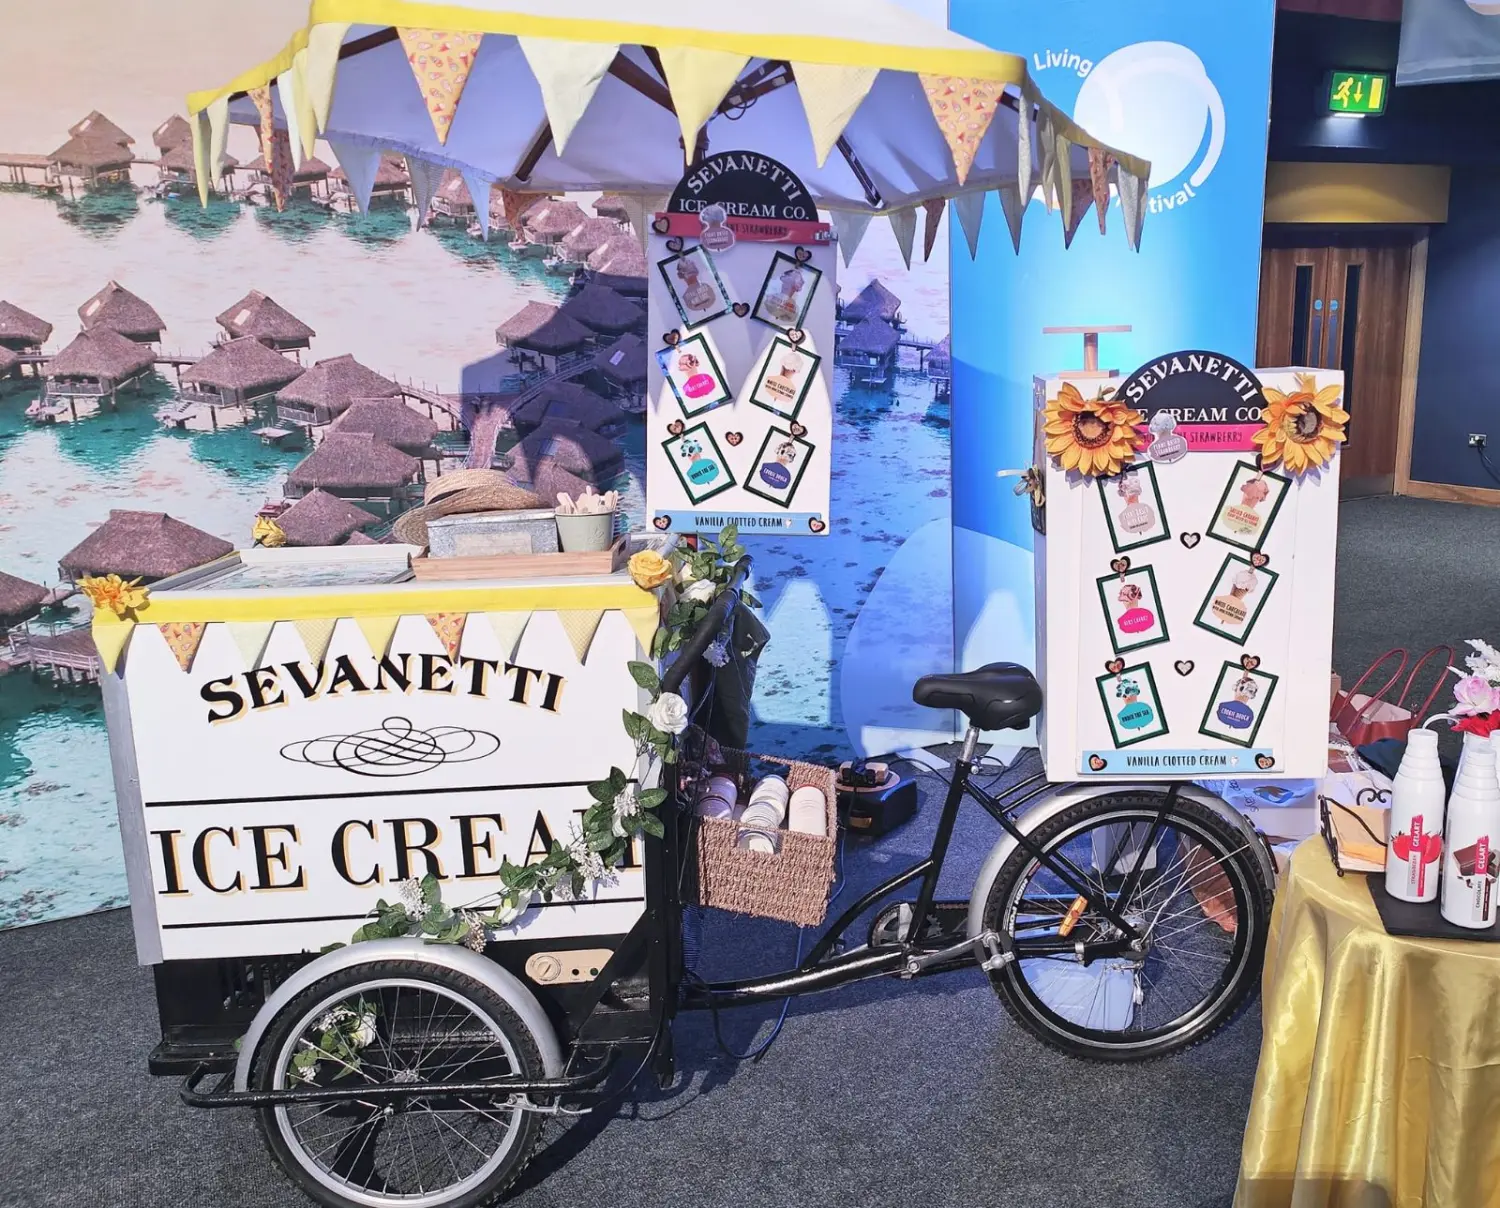 Sevanetti Ice Cream Bikes yellow decoration sets